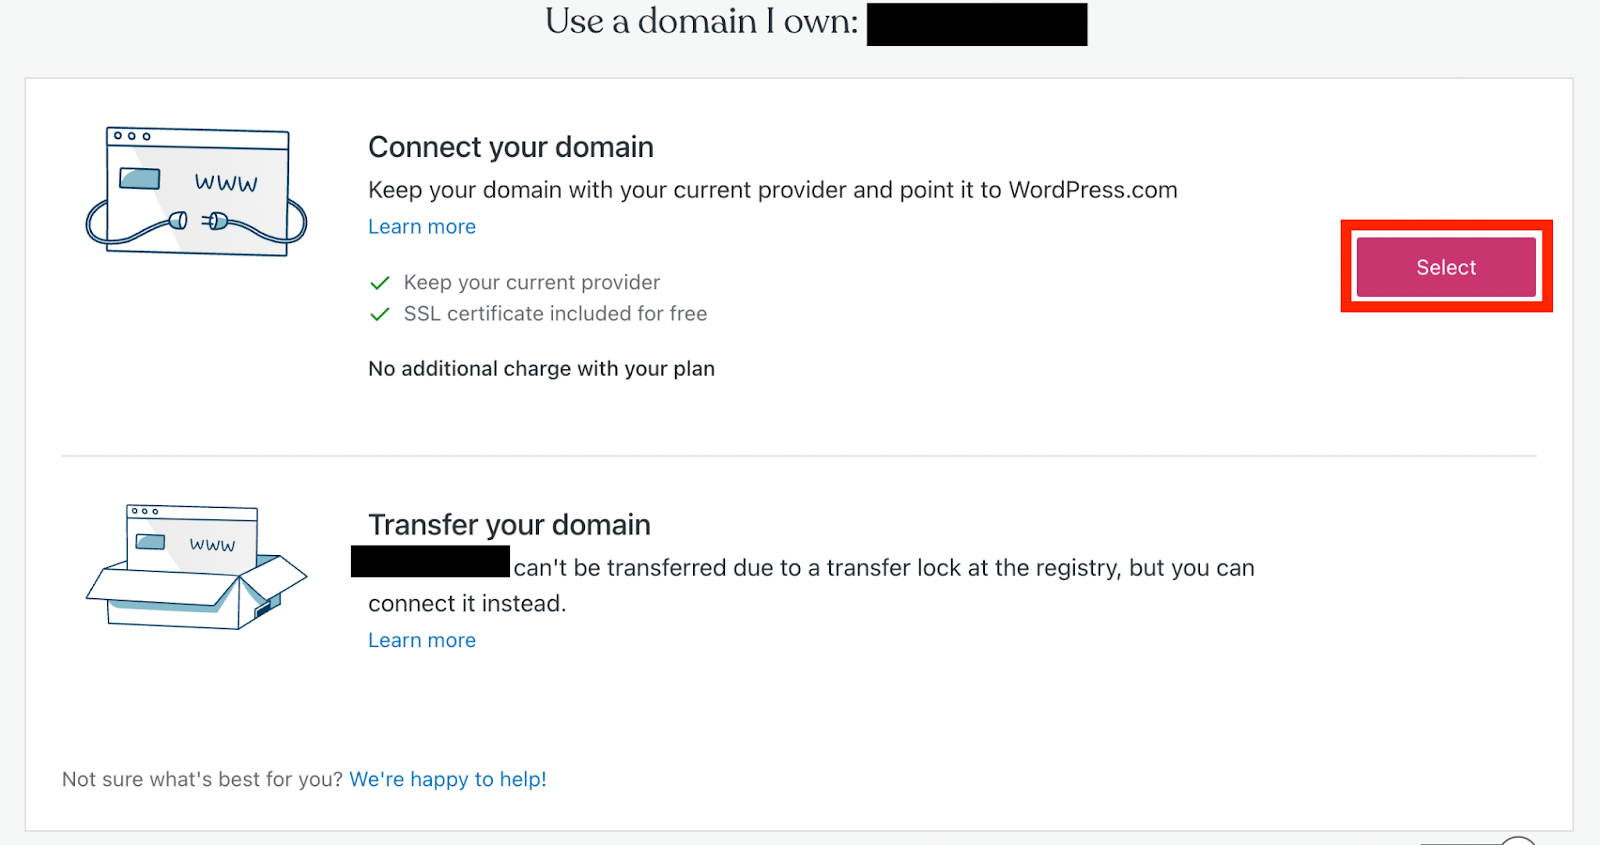 Use a domain I own